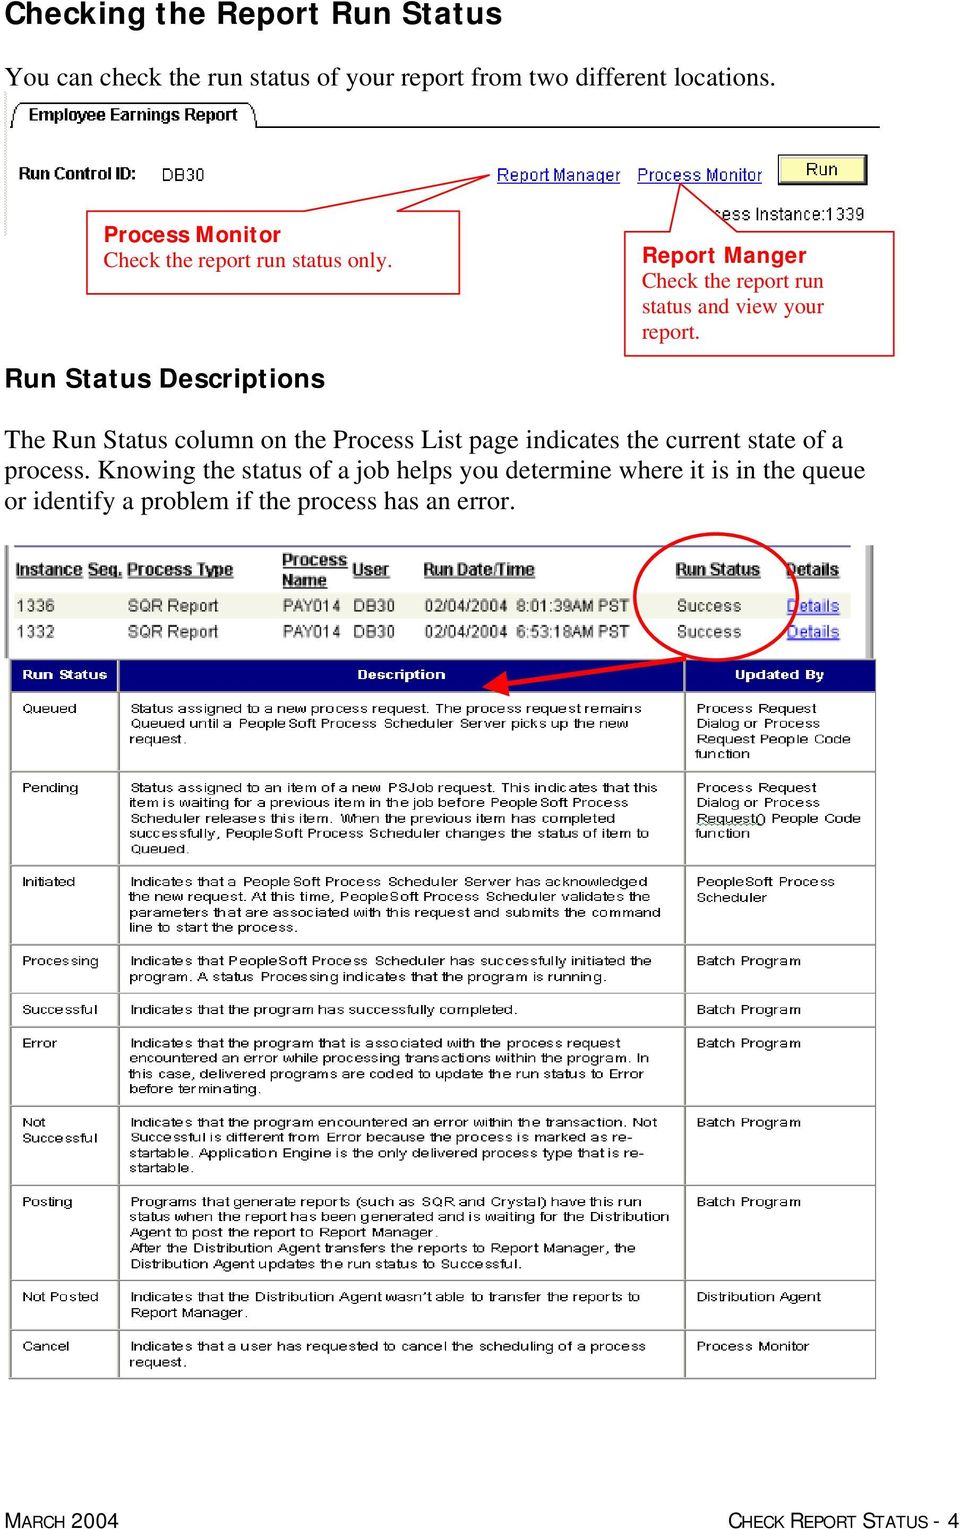 Run Status Descriptions Report Manger Check the report run status and view your report.